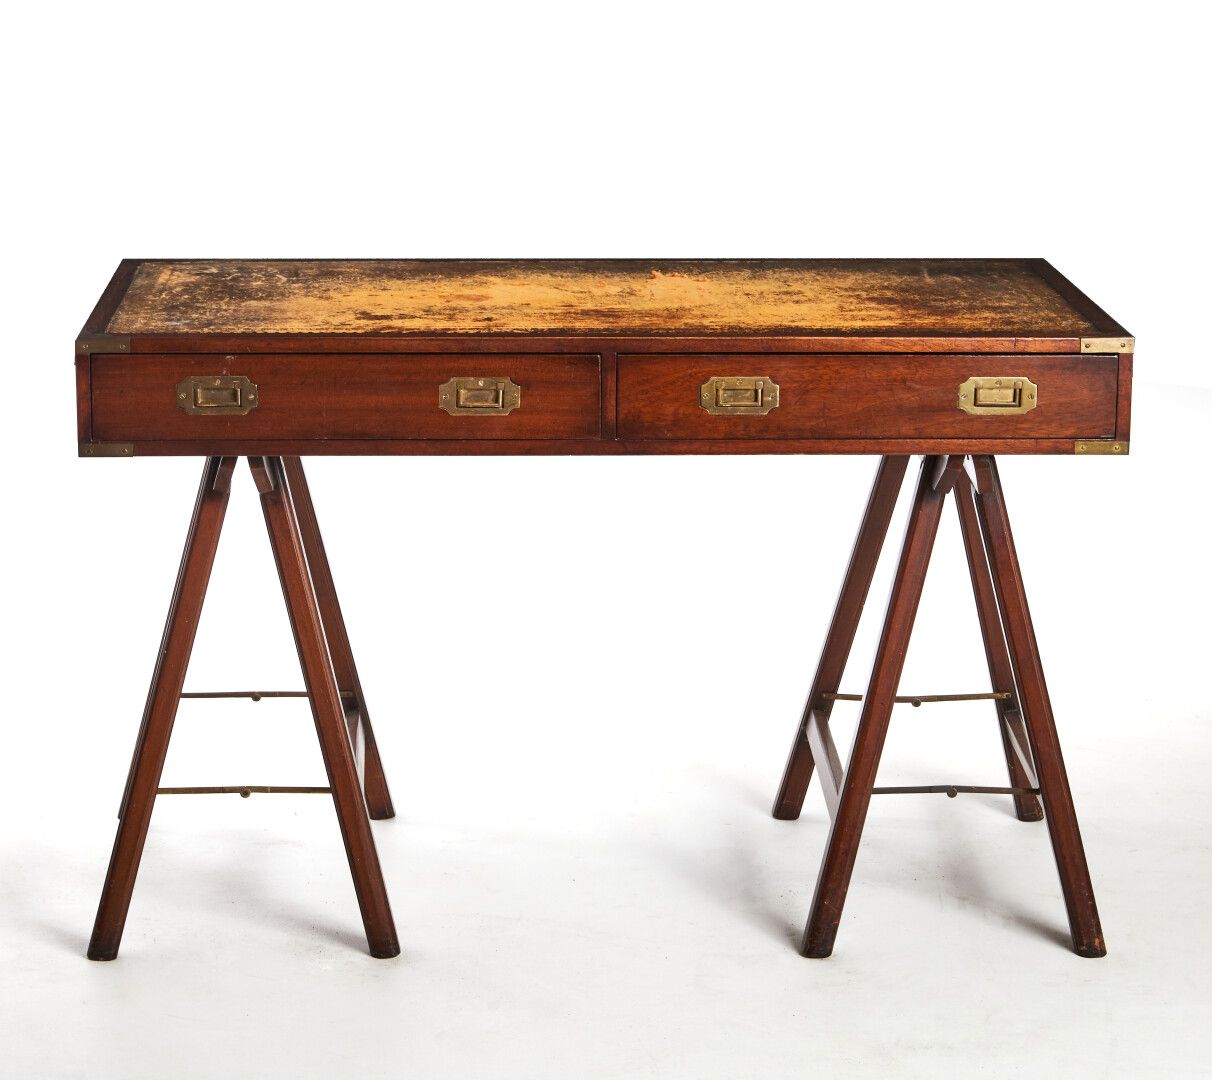 Null 桃花心木饰面的船型办公桌。

2个大抽屉。铜制围栏。带托架的支腿

英文作品。19世纪

78 x 122 x 61 厘米